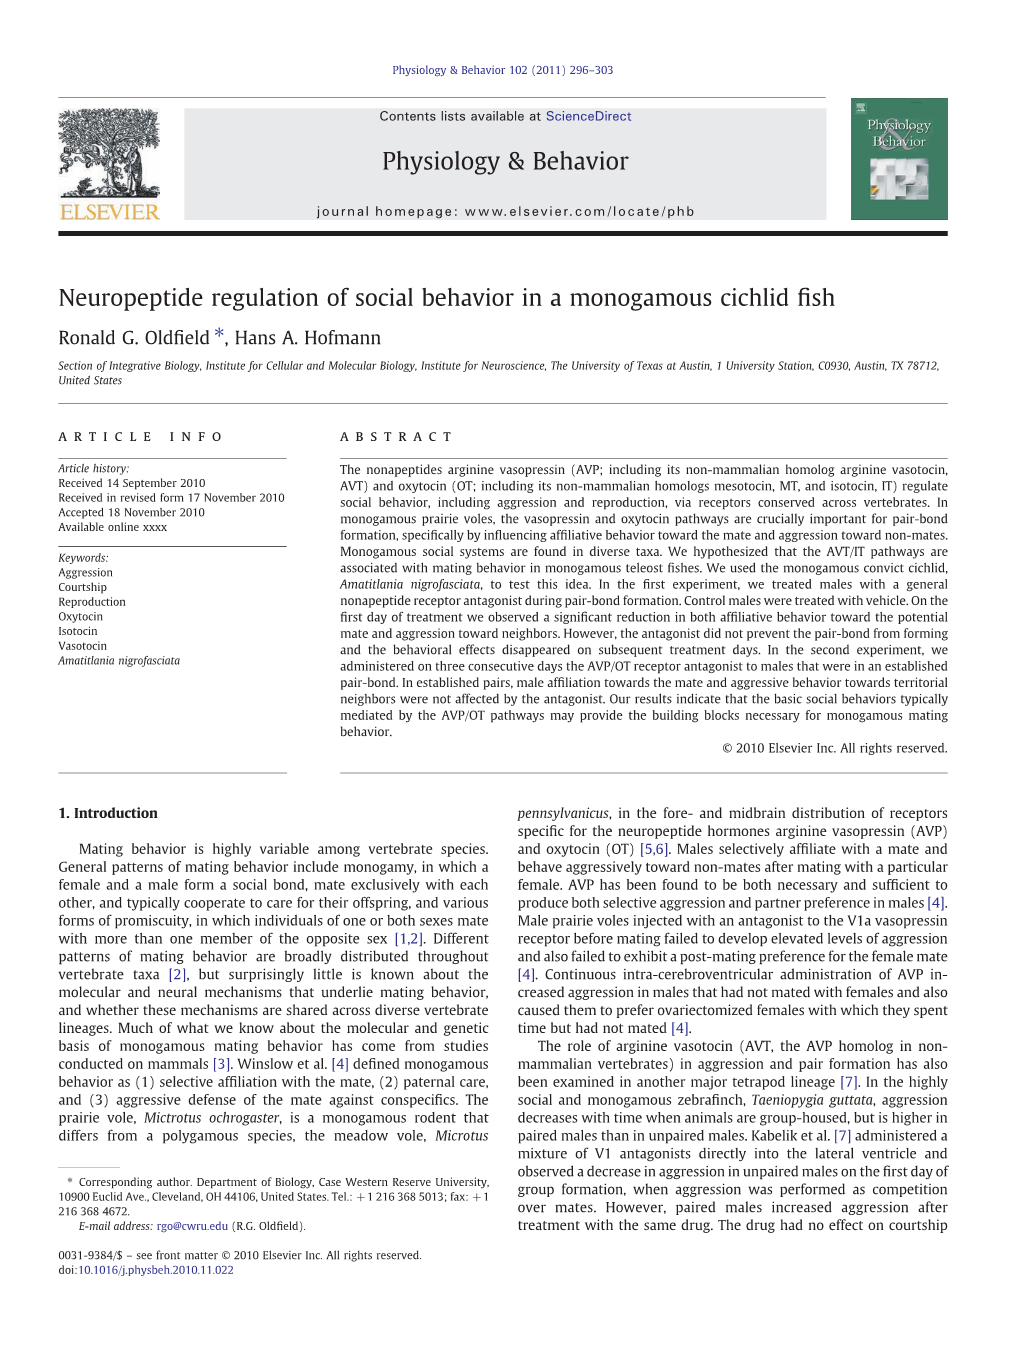 Neuropeptide Regulation of Social Behavior in a Monogamous Cichlid ﬁsh